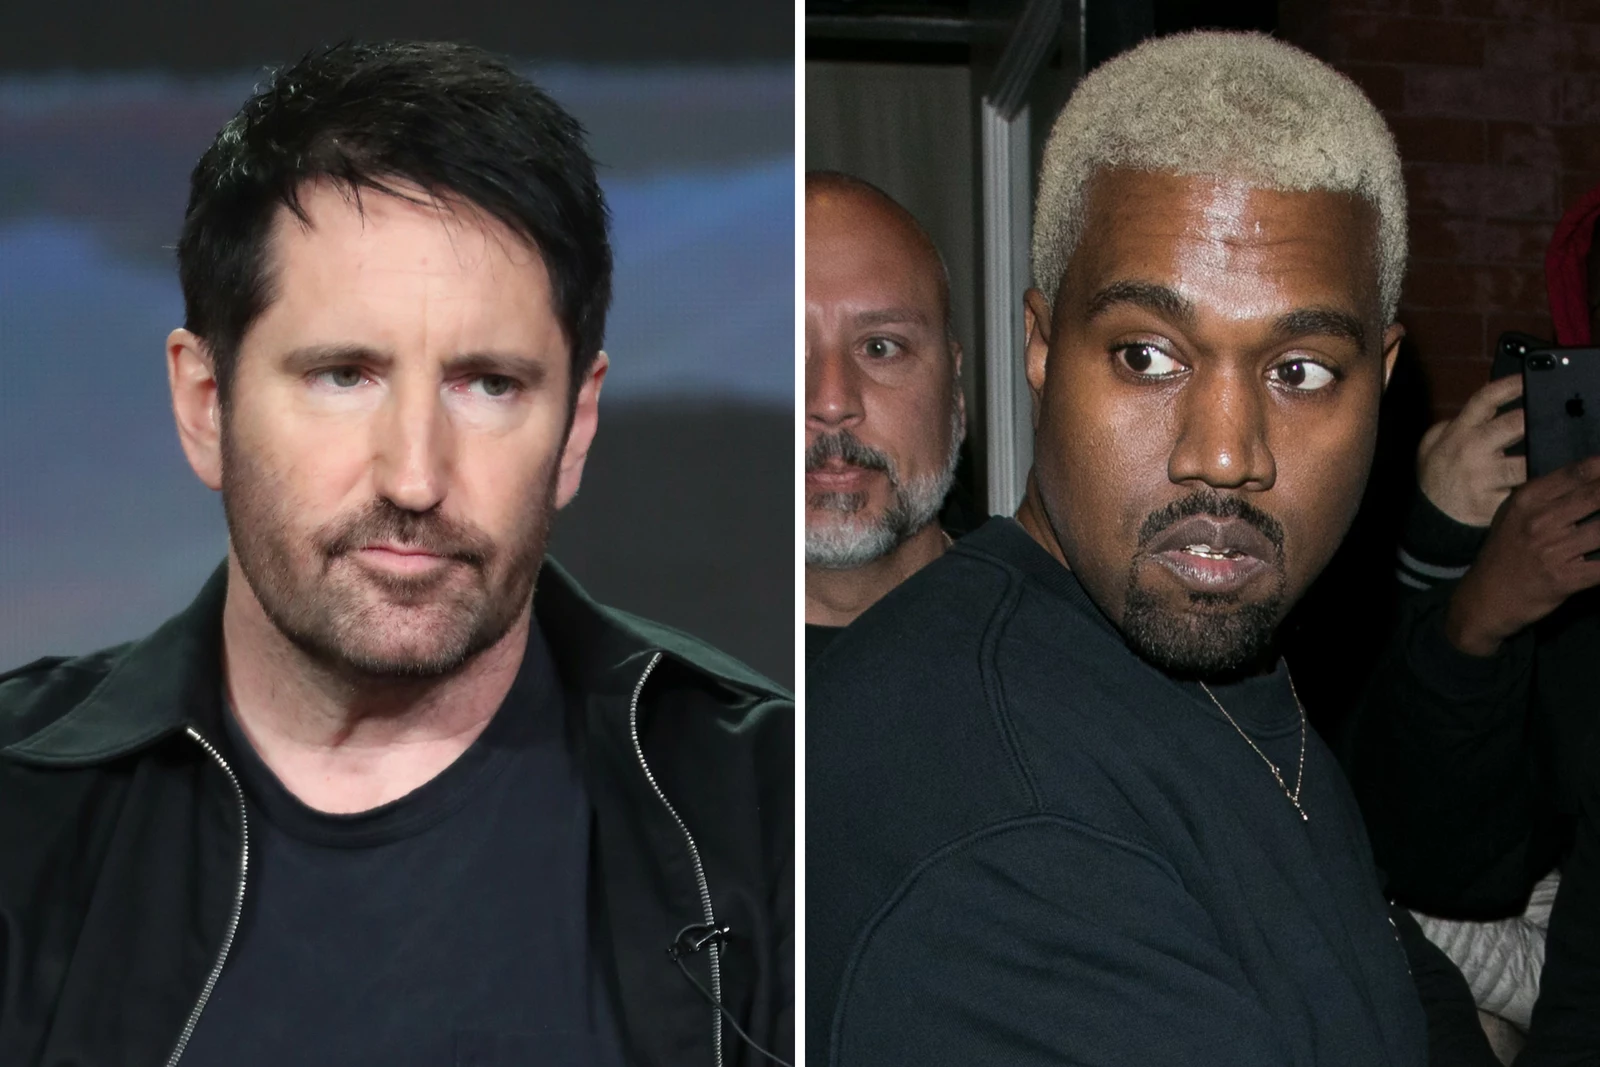 Trent Reznor On Kanye West: He's "Lost His F**kig Mind"